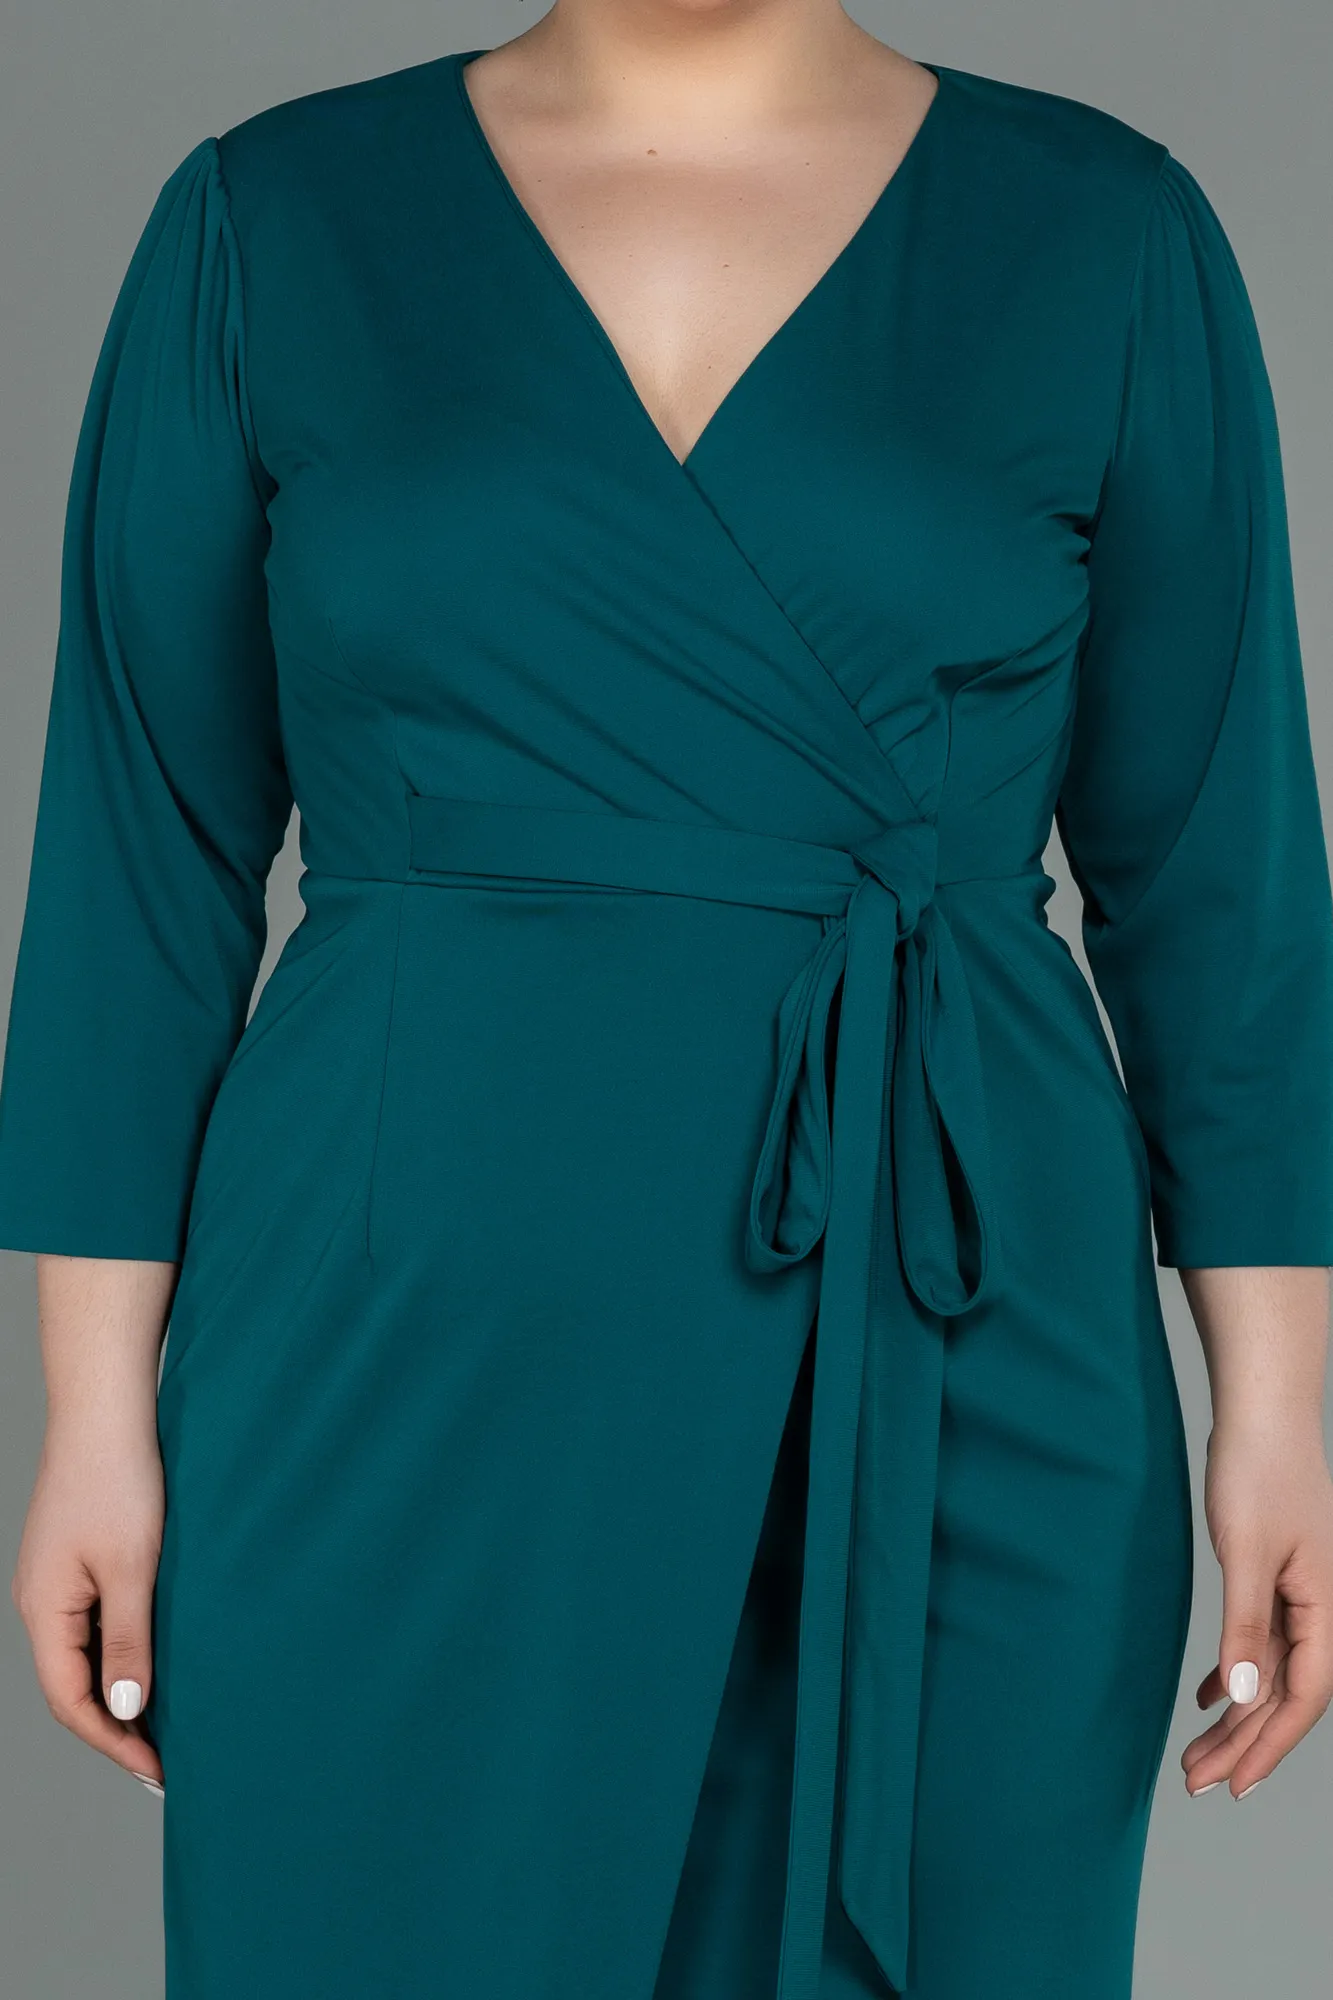 Emerald Green-Midi Plus Size Evening Dress ABK1744